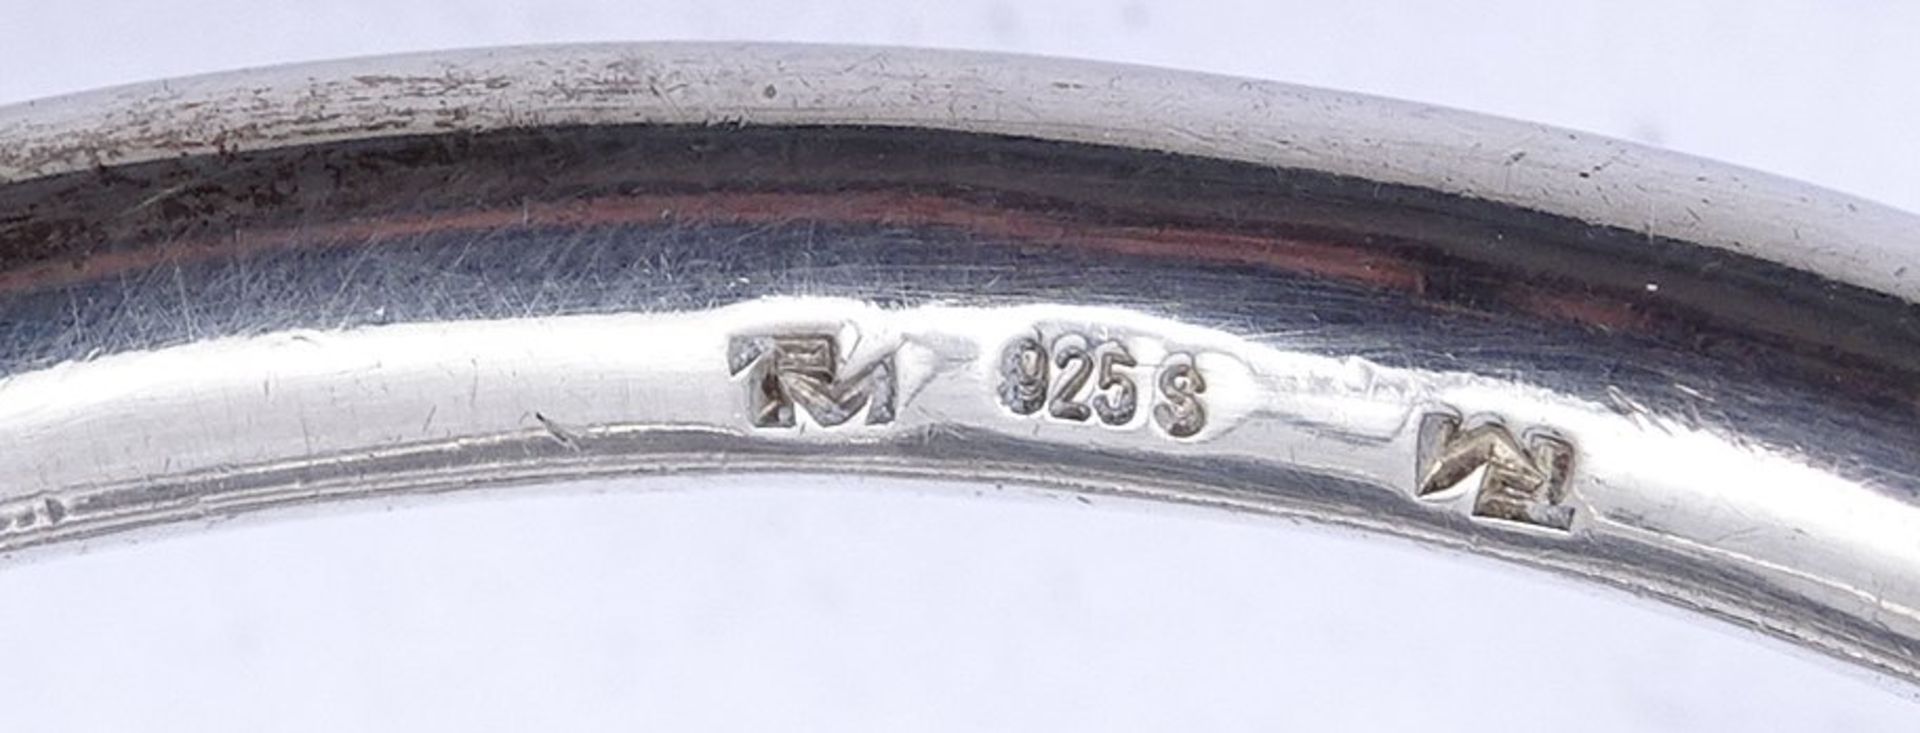 Massive Sterling Silber Armbanduhr , Markenlos, mechanisch, Werk läuft, D. 27,8mm, 106g. - Image 5 of 5